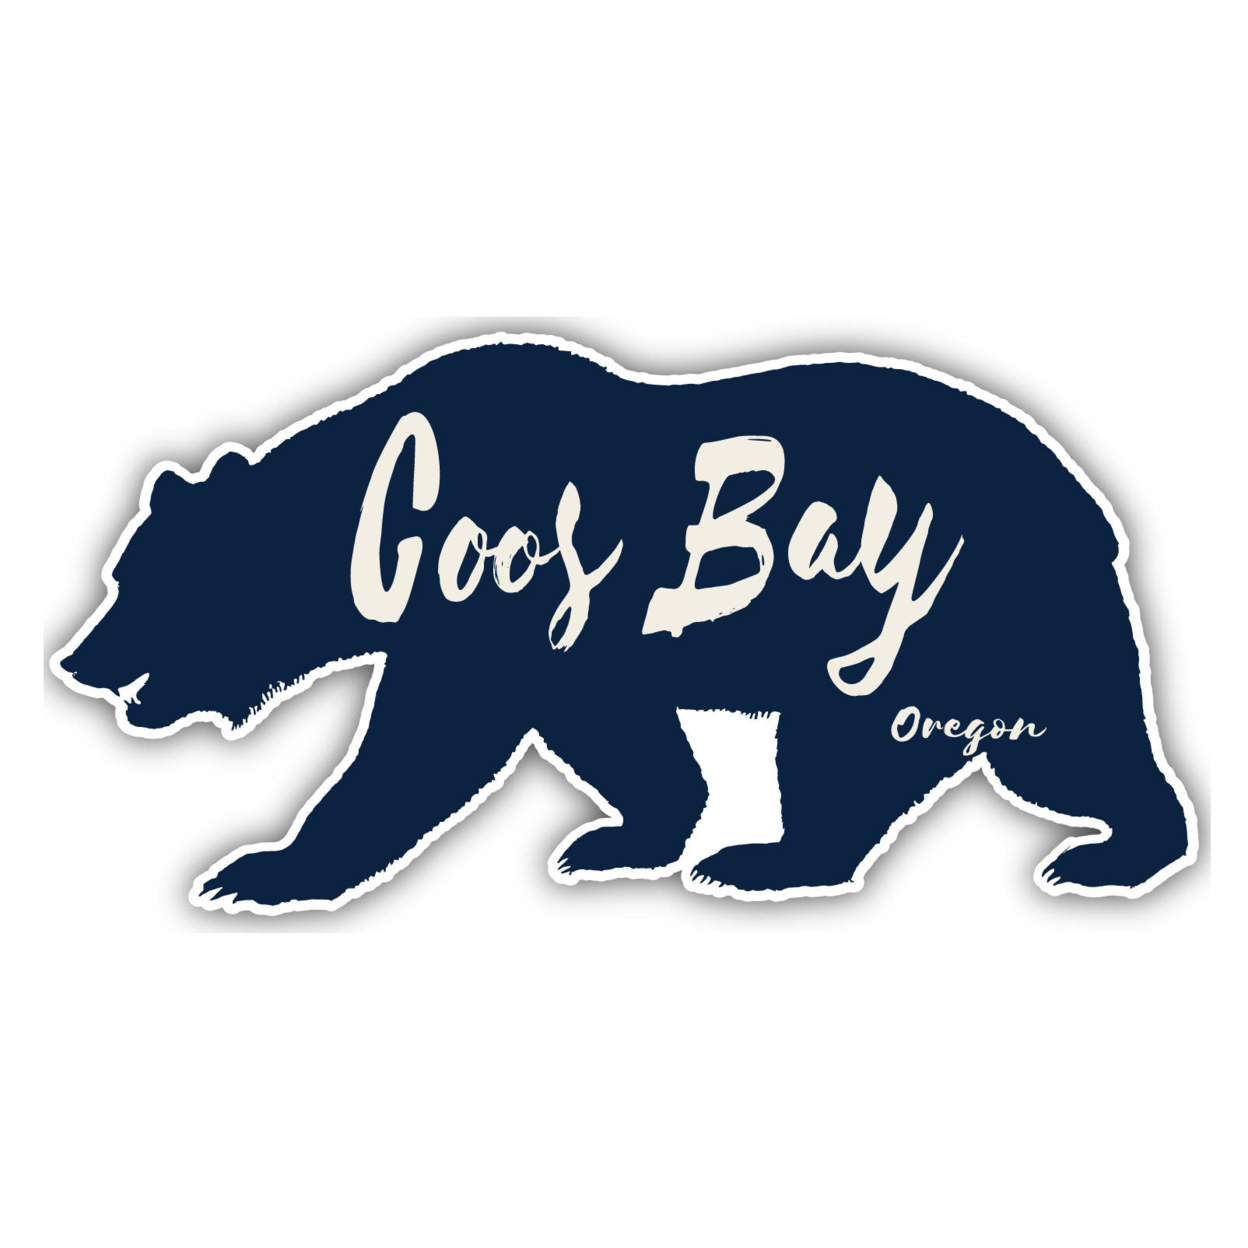 Coos Bay Oregon Souvenir Decorative Stickers (Choose Theme And Size) - Single Unit, 10-Inch, Camp Life